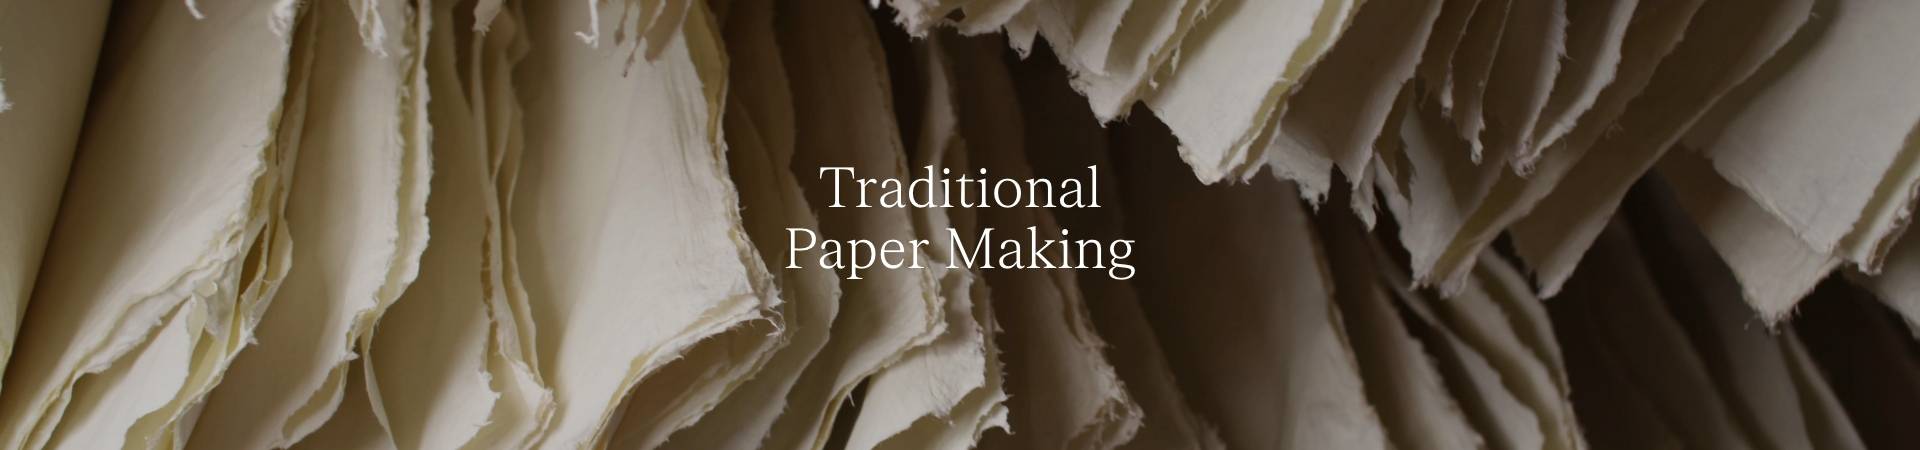 Traditional Paper Making.jpg